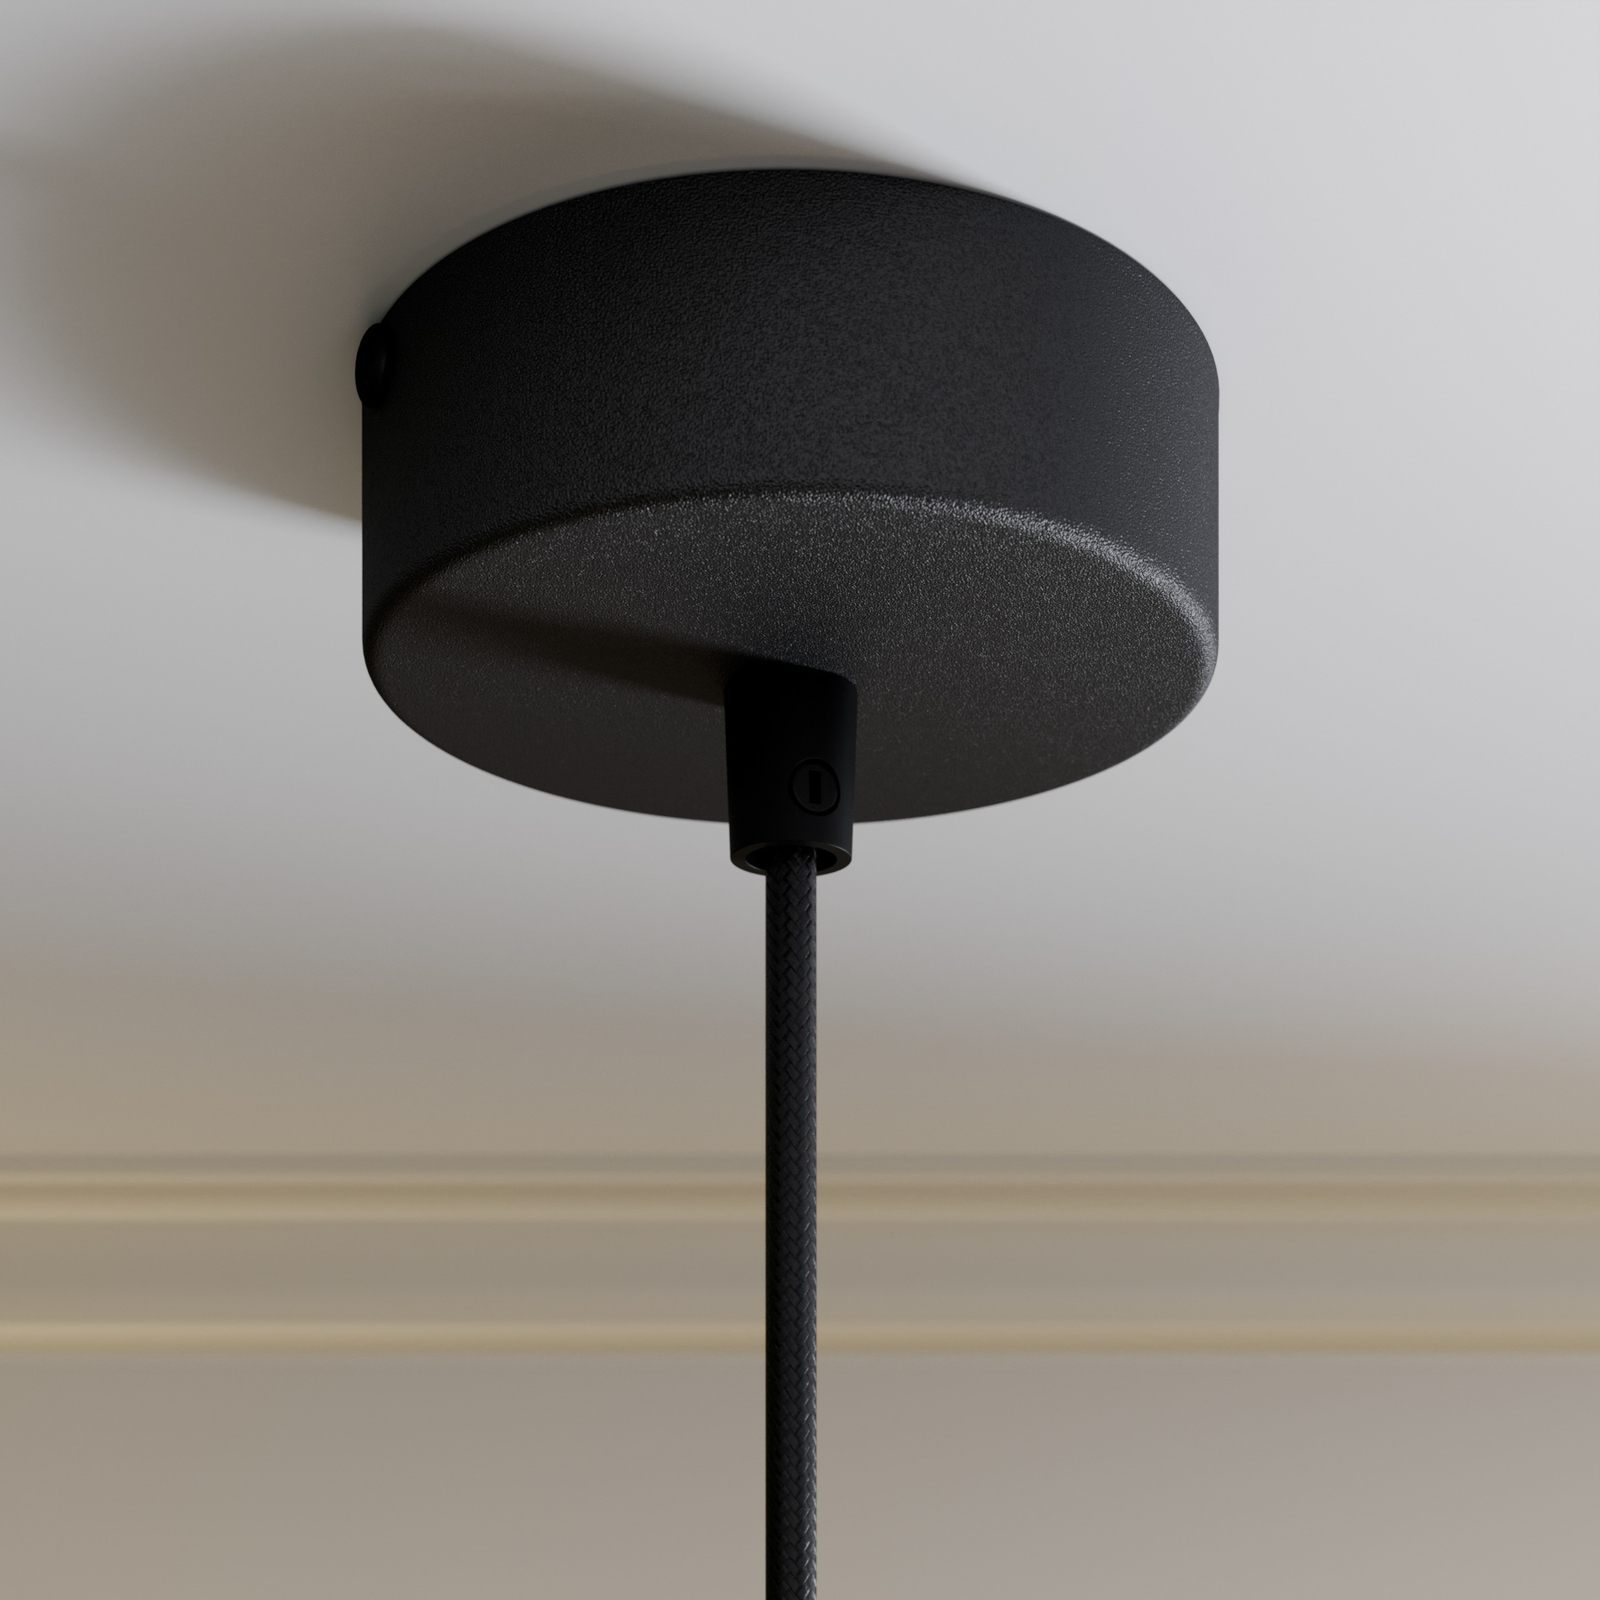 Lampa wisząca Rif z metalu, czarna, Ø 15 cm